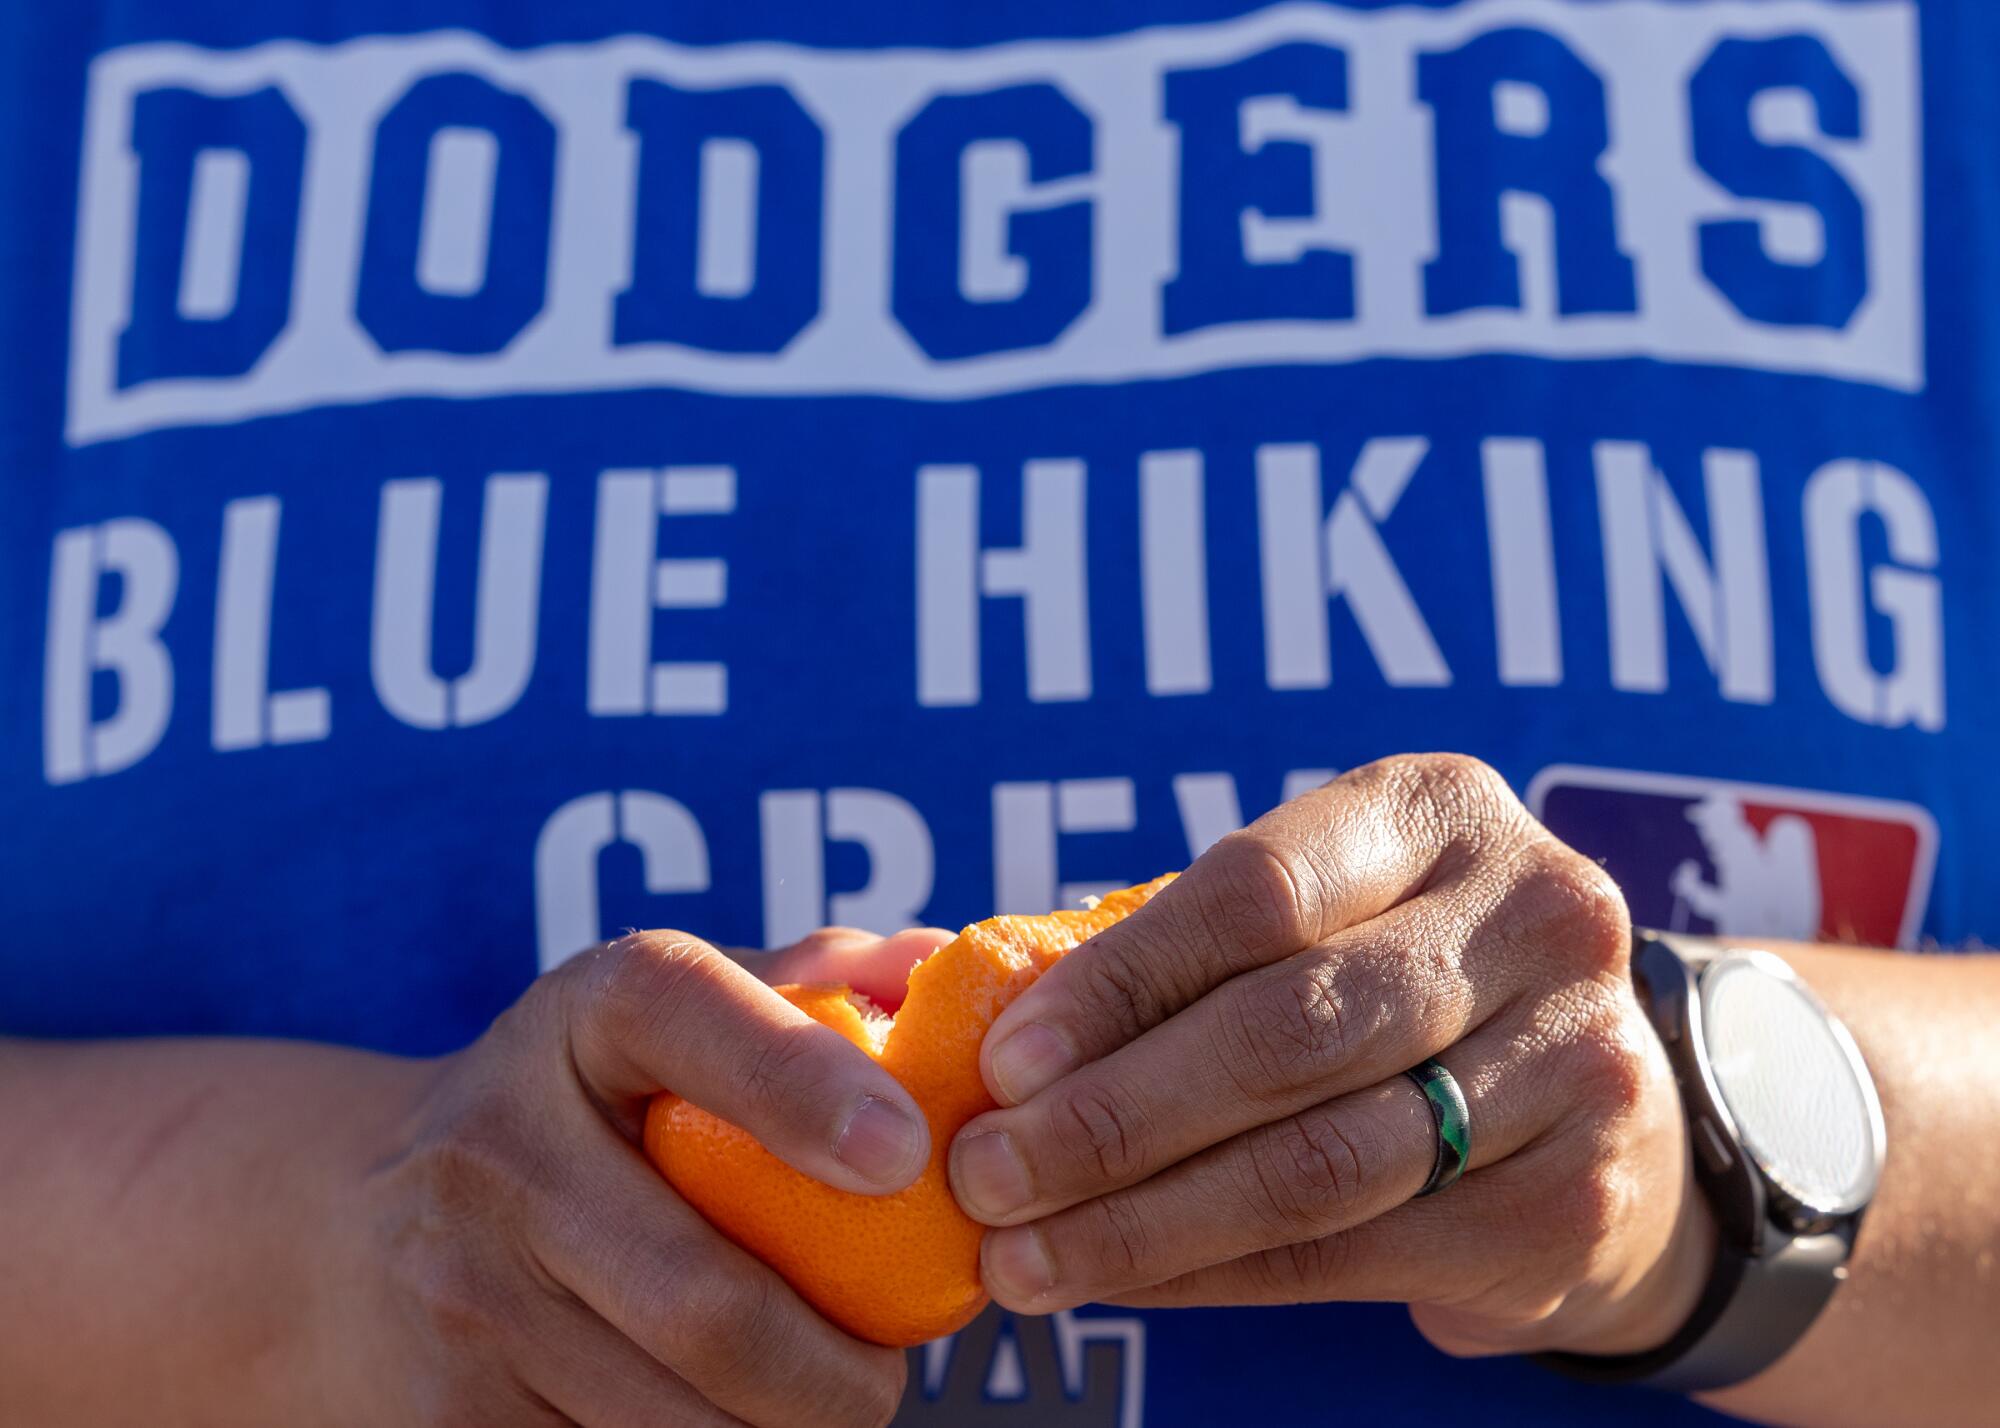 A hiker wearing custom Dodgers Blue Hiking Crew merch takes a break to peel a tangerine snack.